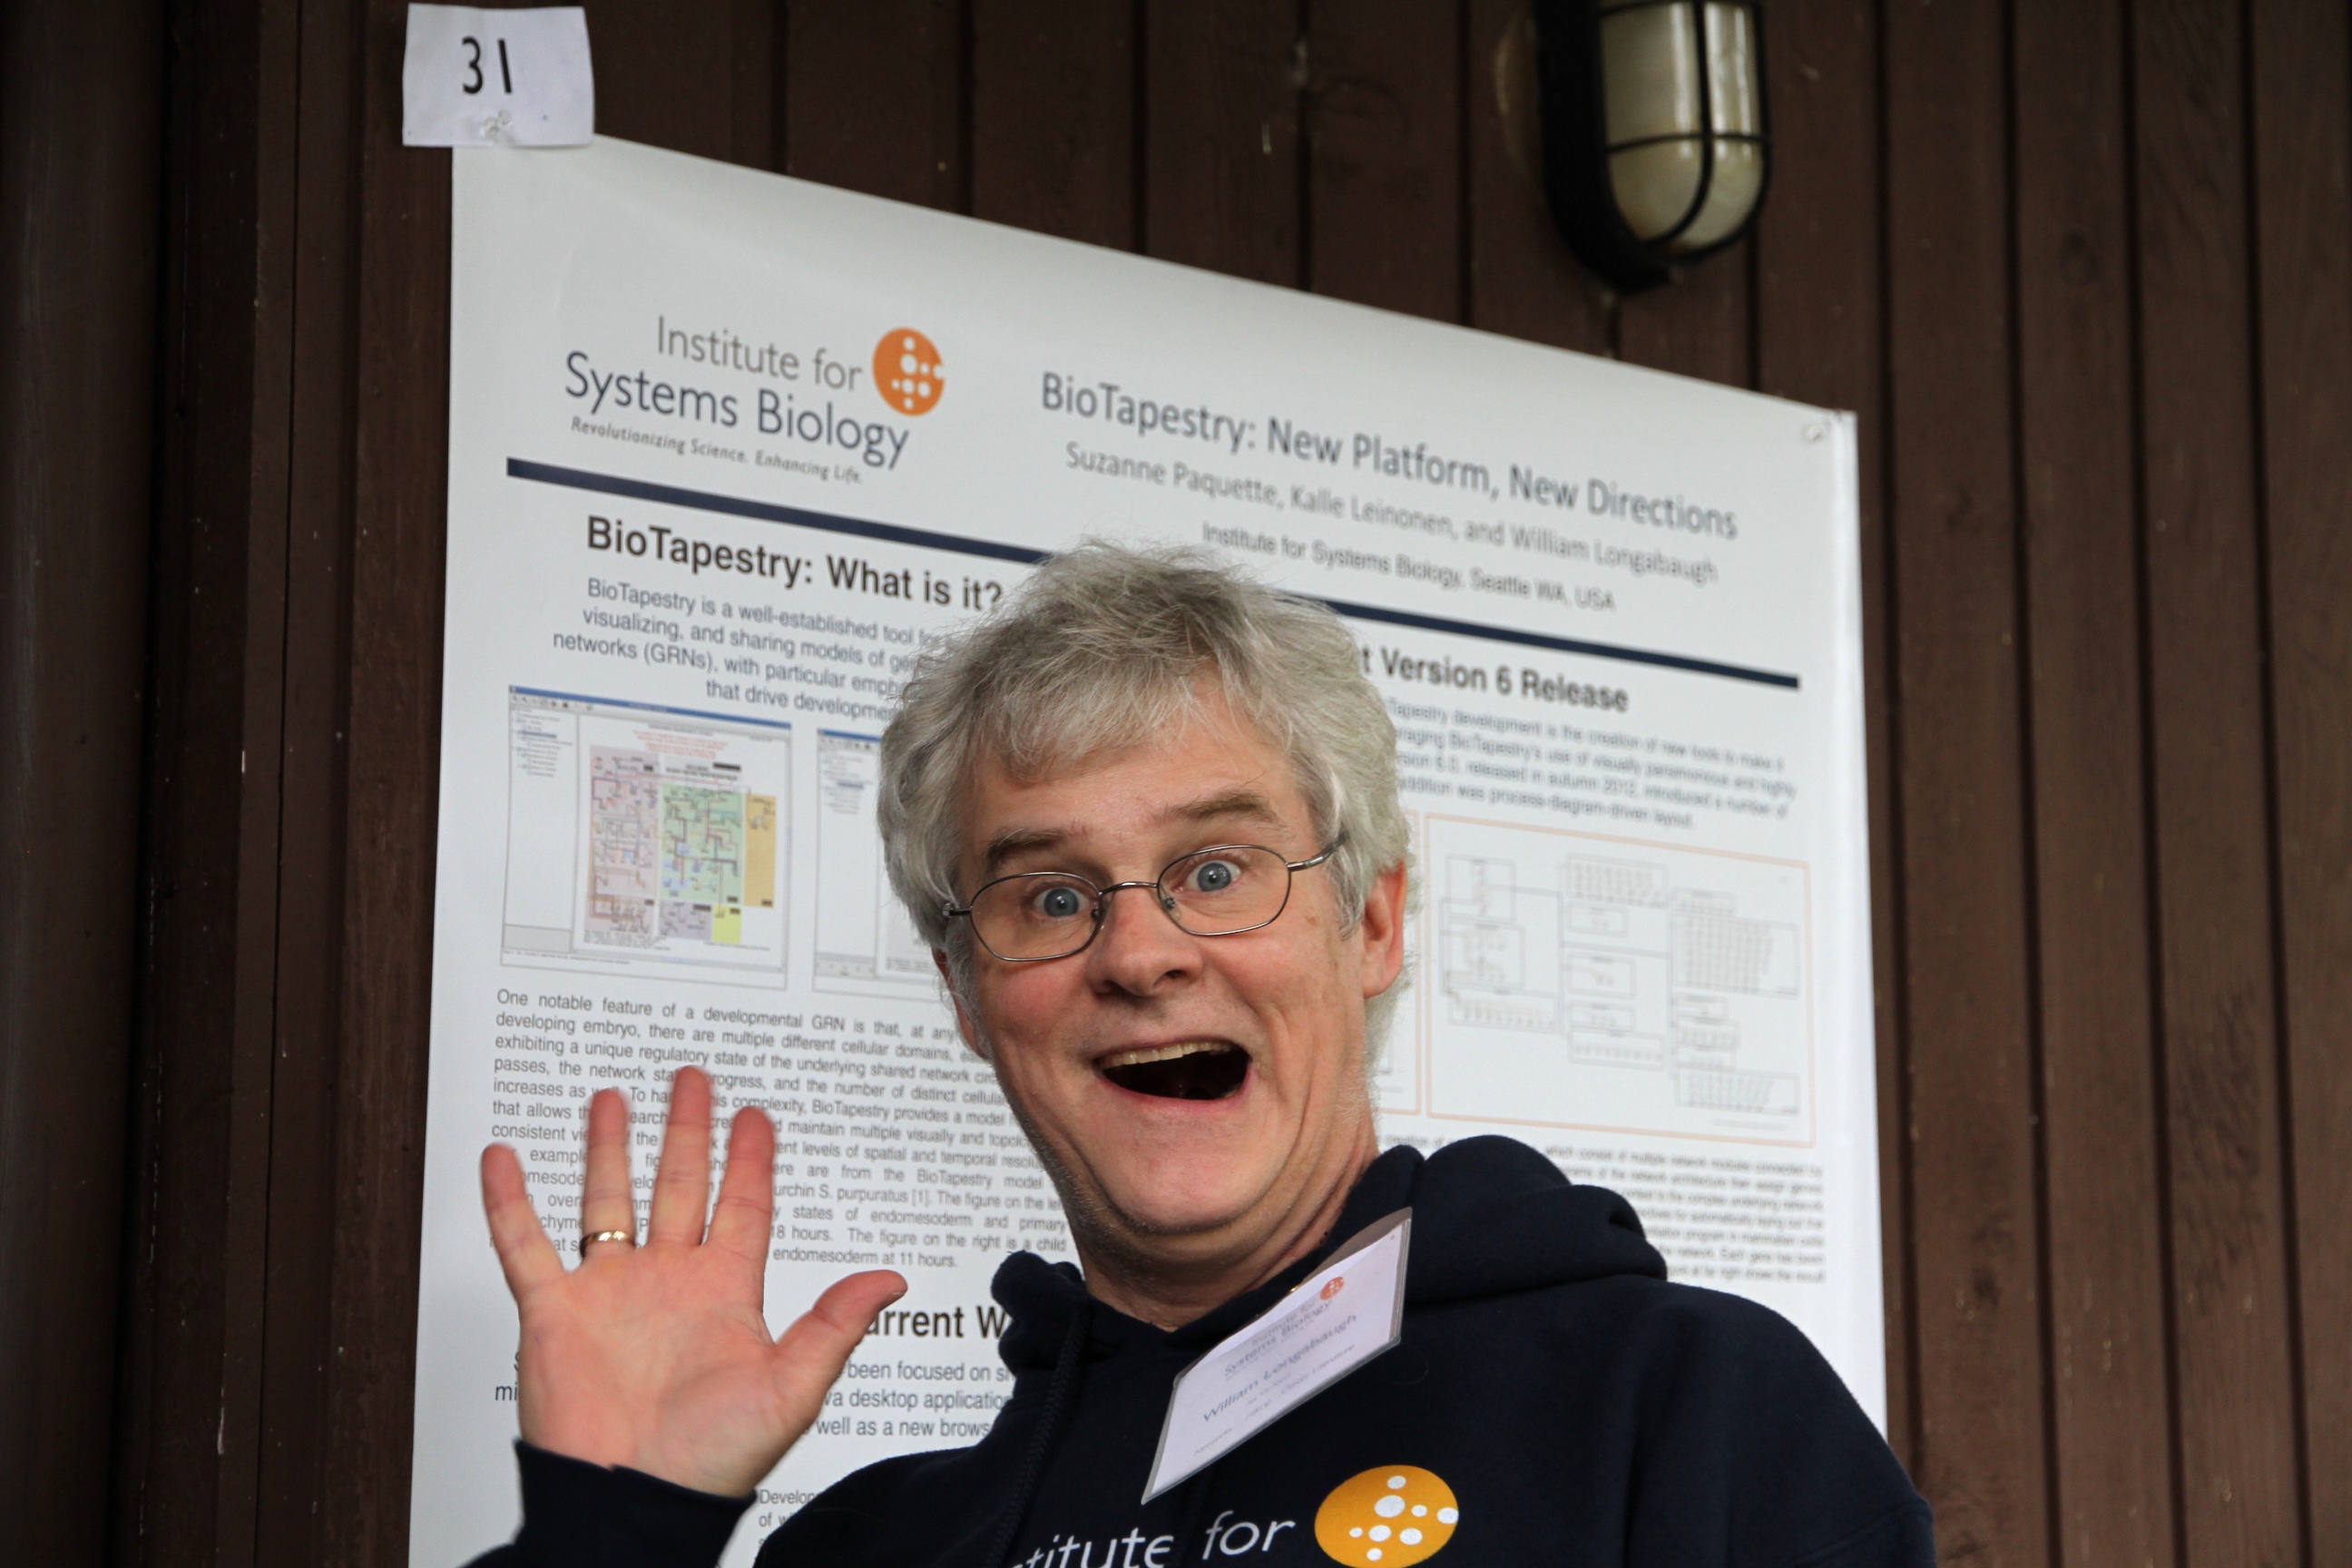 photo of sofware engineer waving